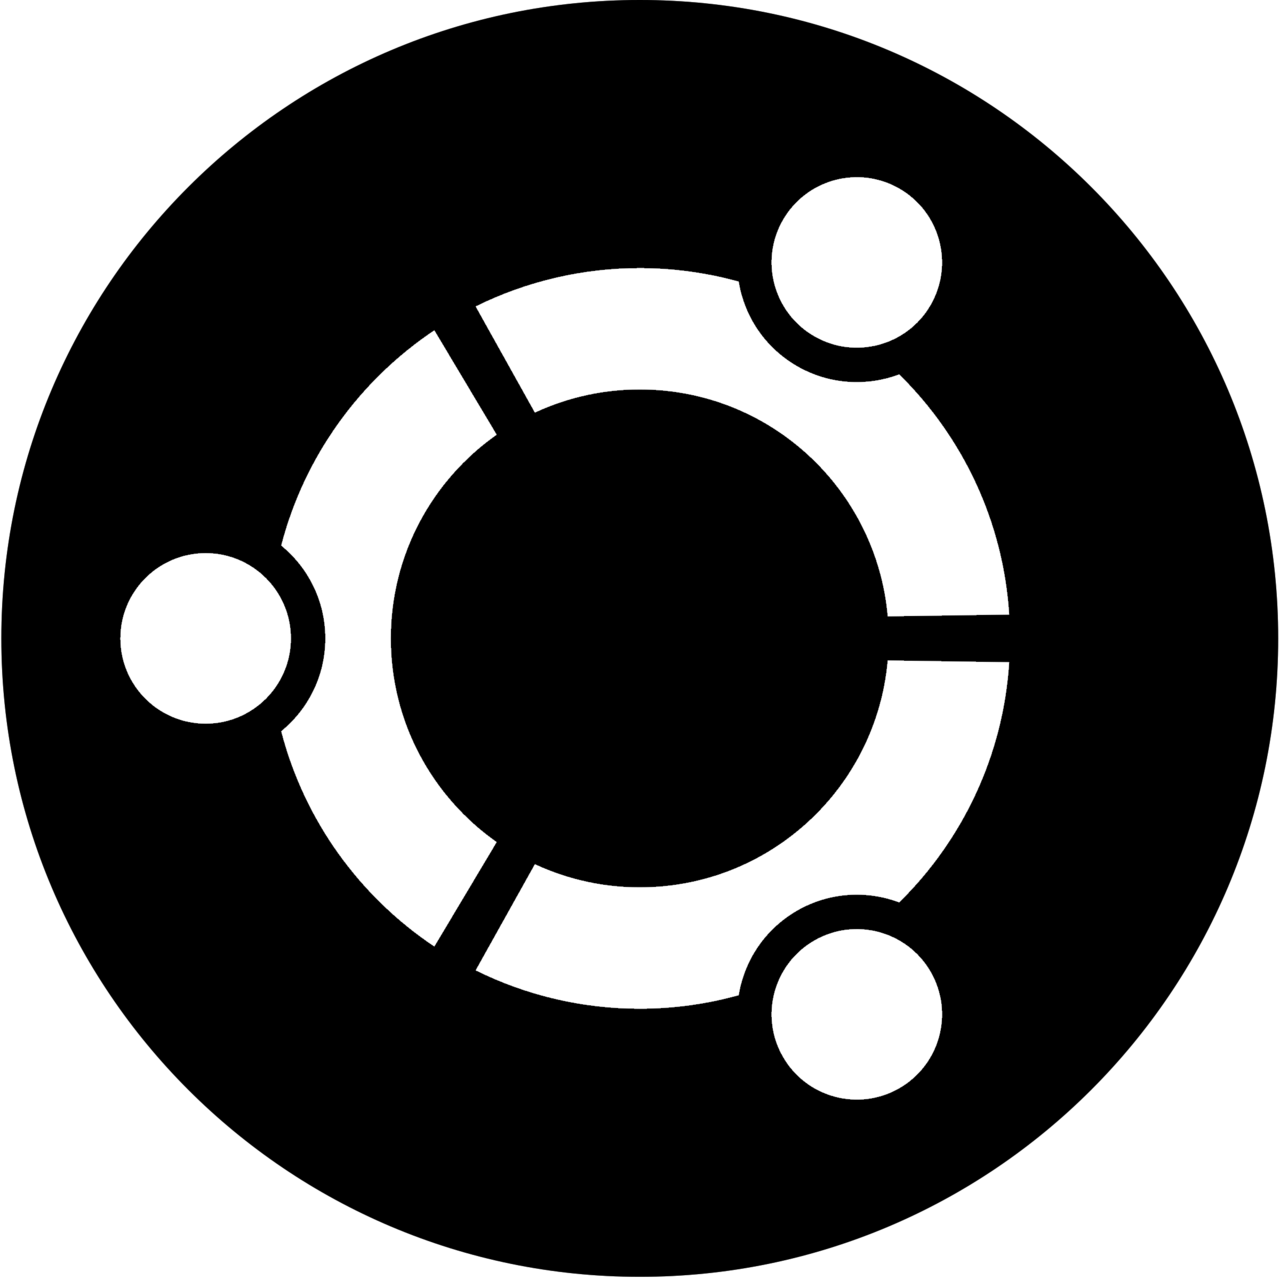 Ubuntu Logo PNG Pic Background